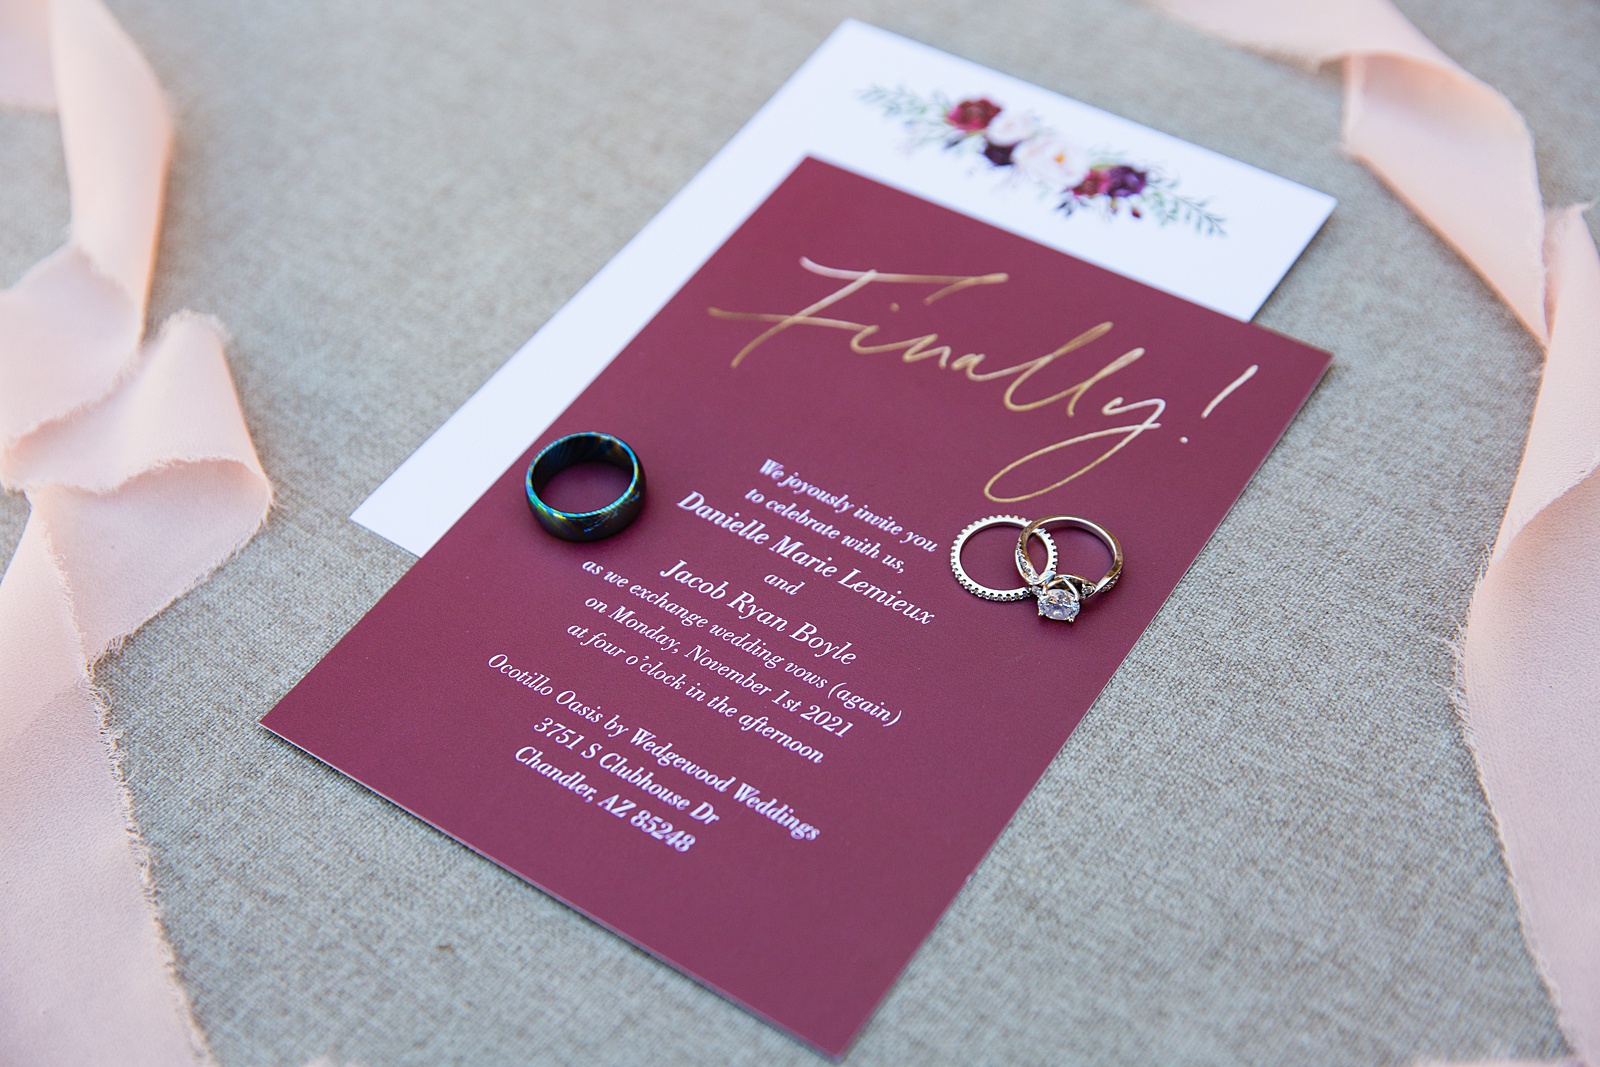 Maroon and White wedding invitation suite with wedding rings by Arizona wedding photographer PMA Photography.